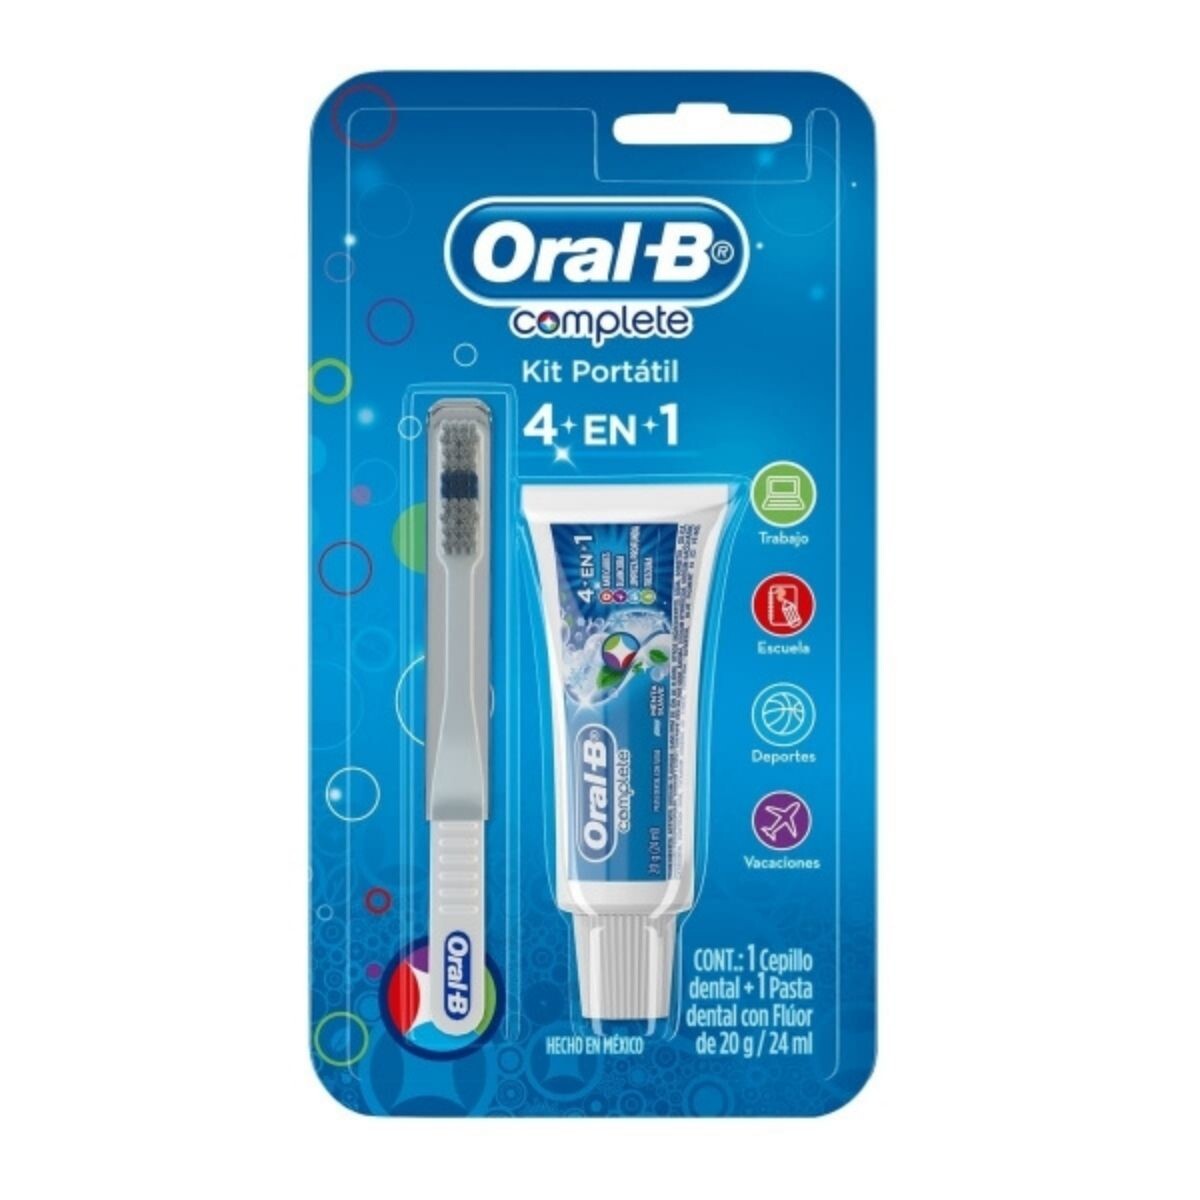 Pasta Dental Oral-B Complete con Flour 29 GR + Cepillo Dental Portátil 